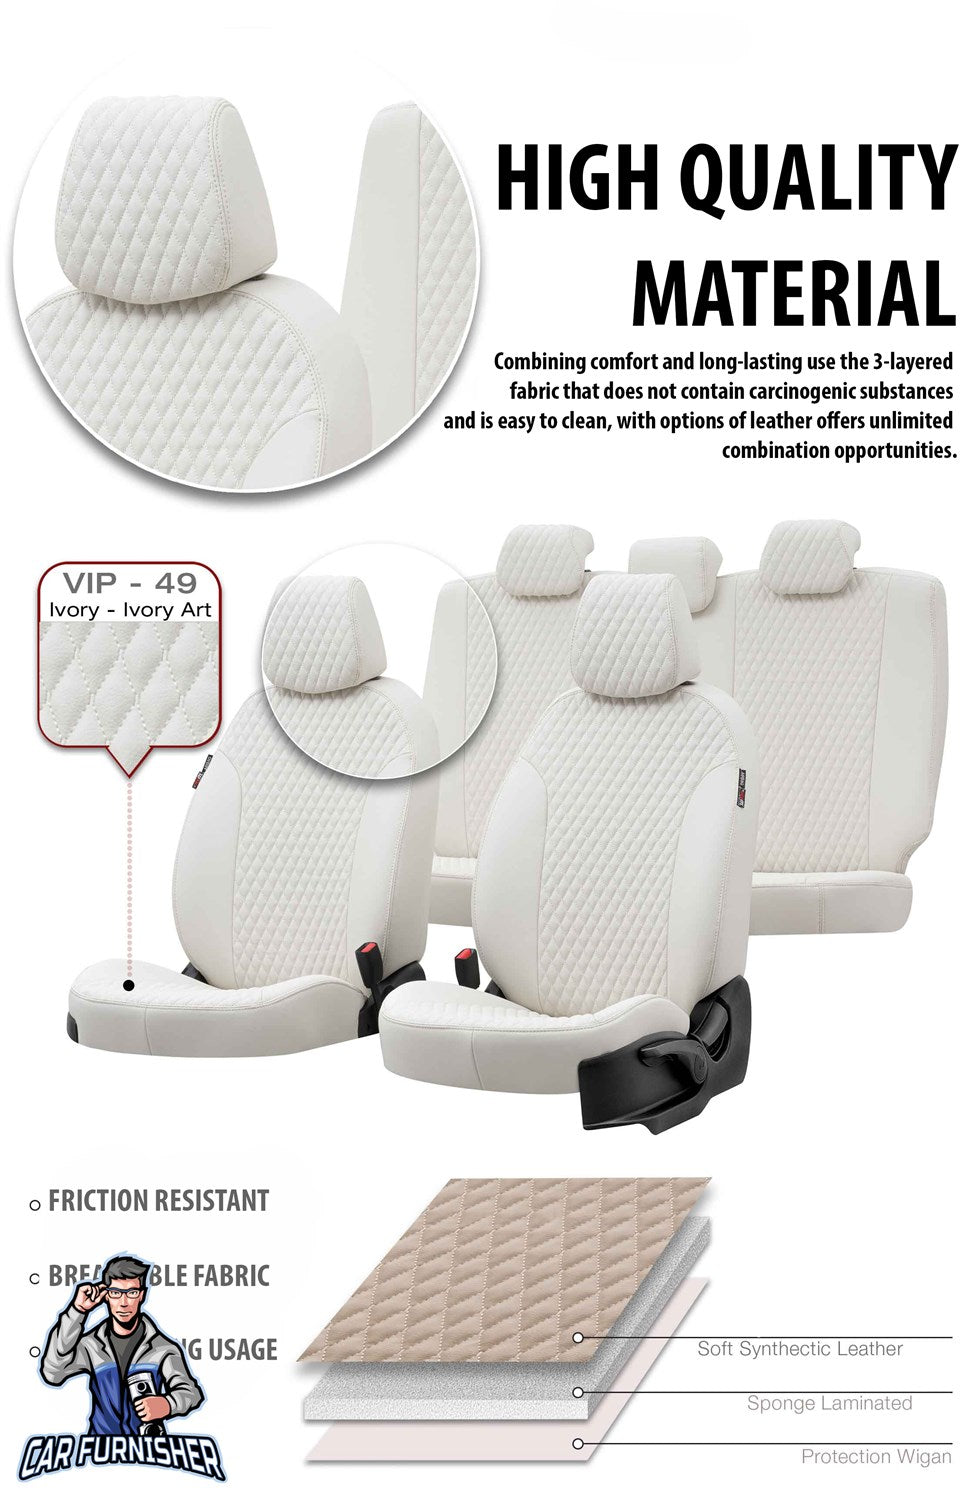 Fiat Brava Seat Covers Amsterdam Leather Design Black Leather